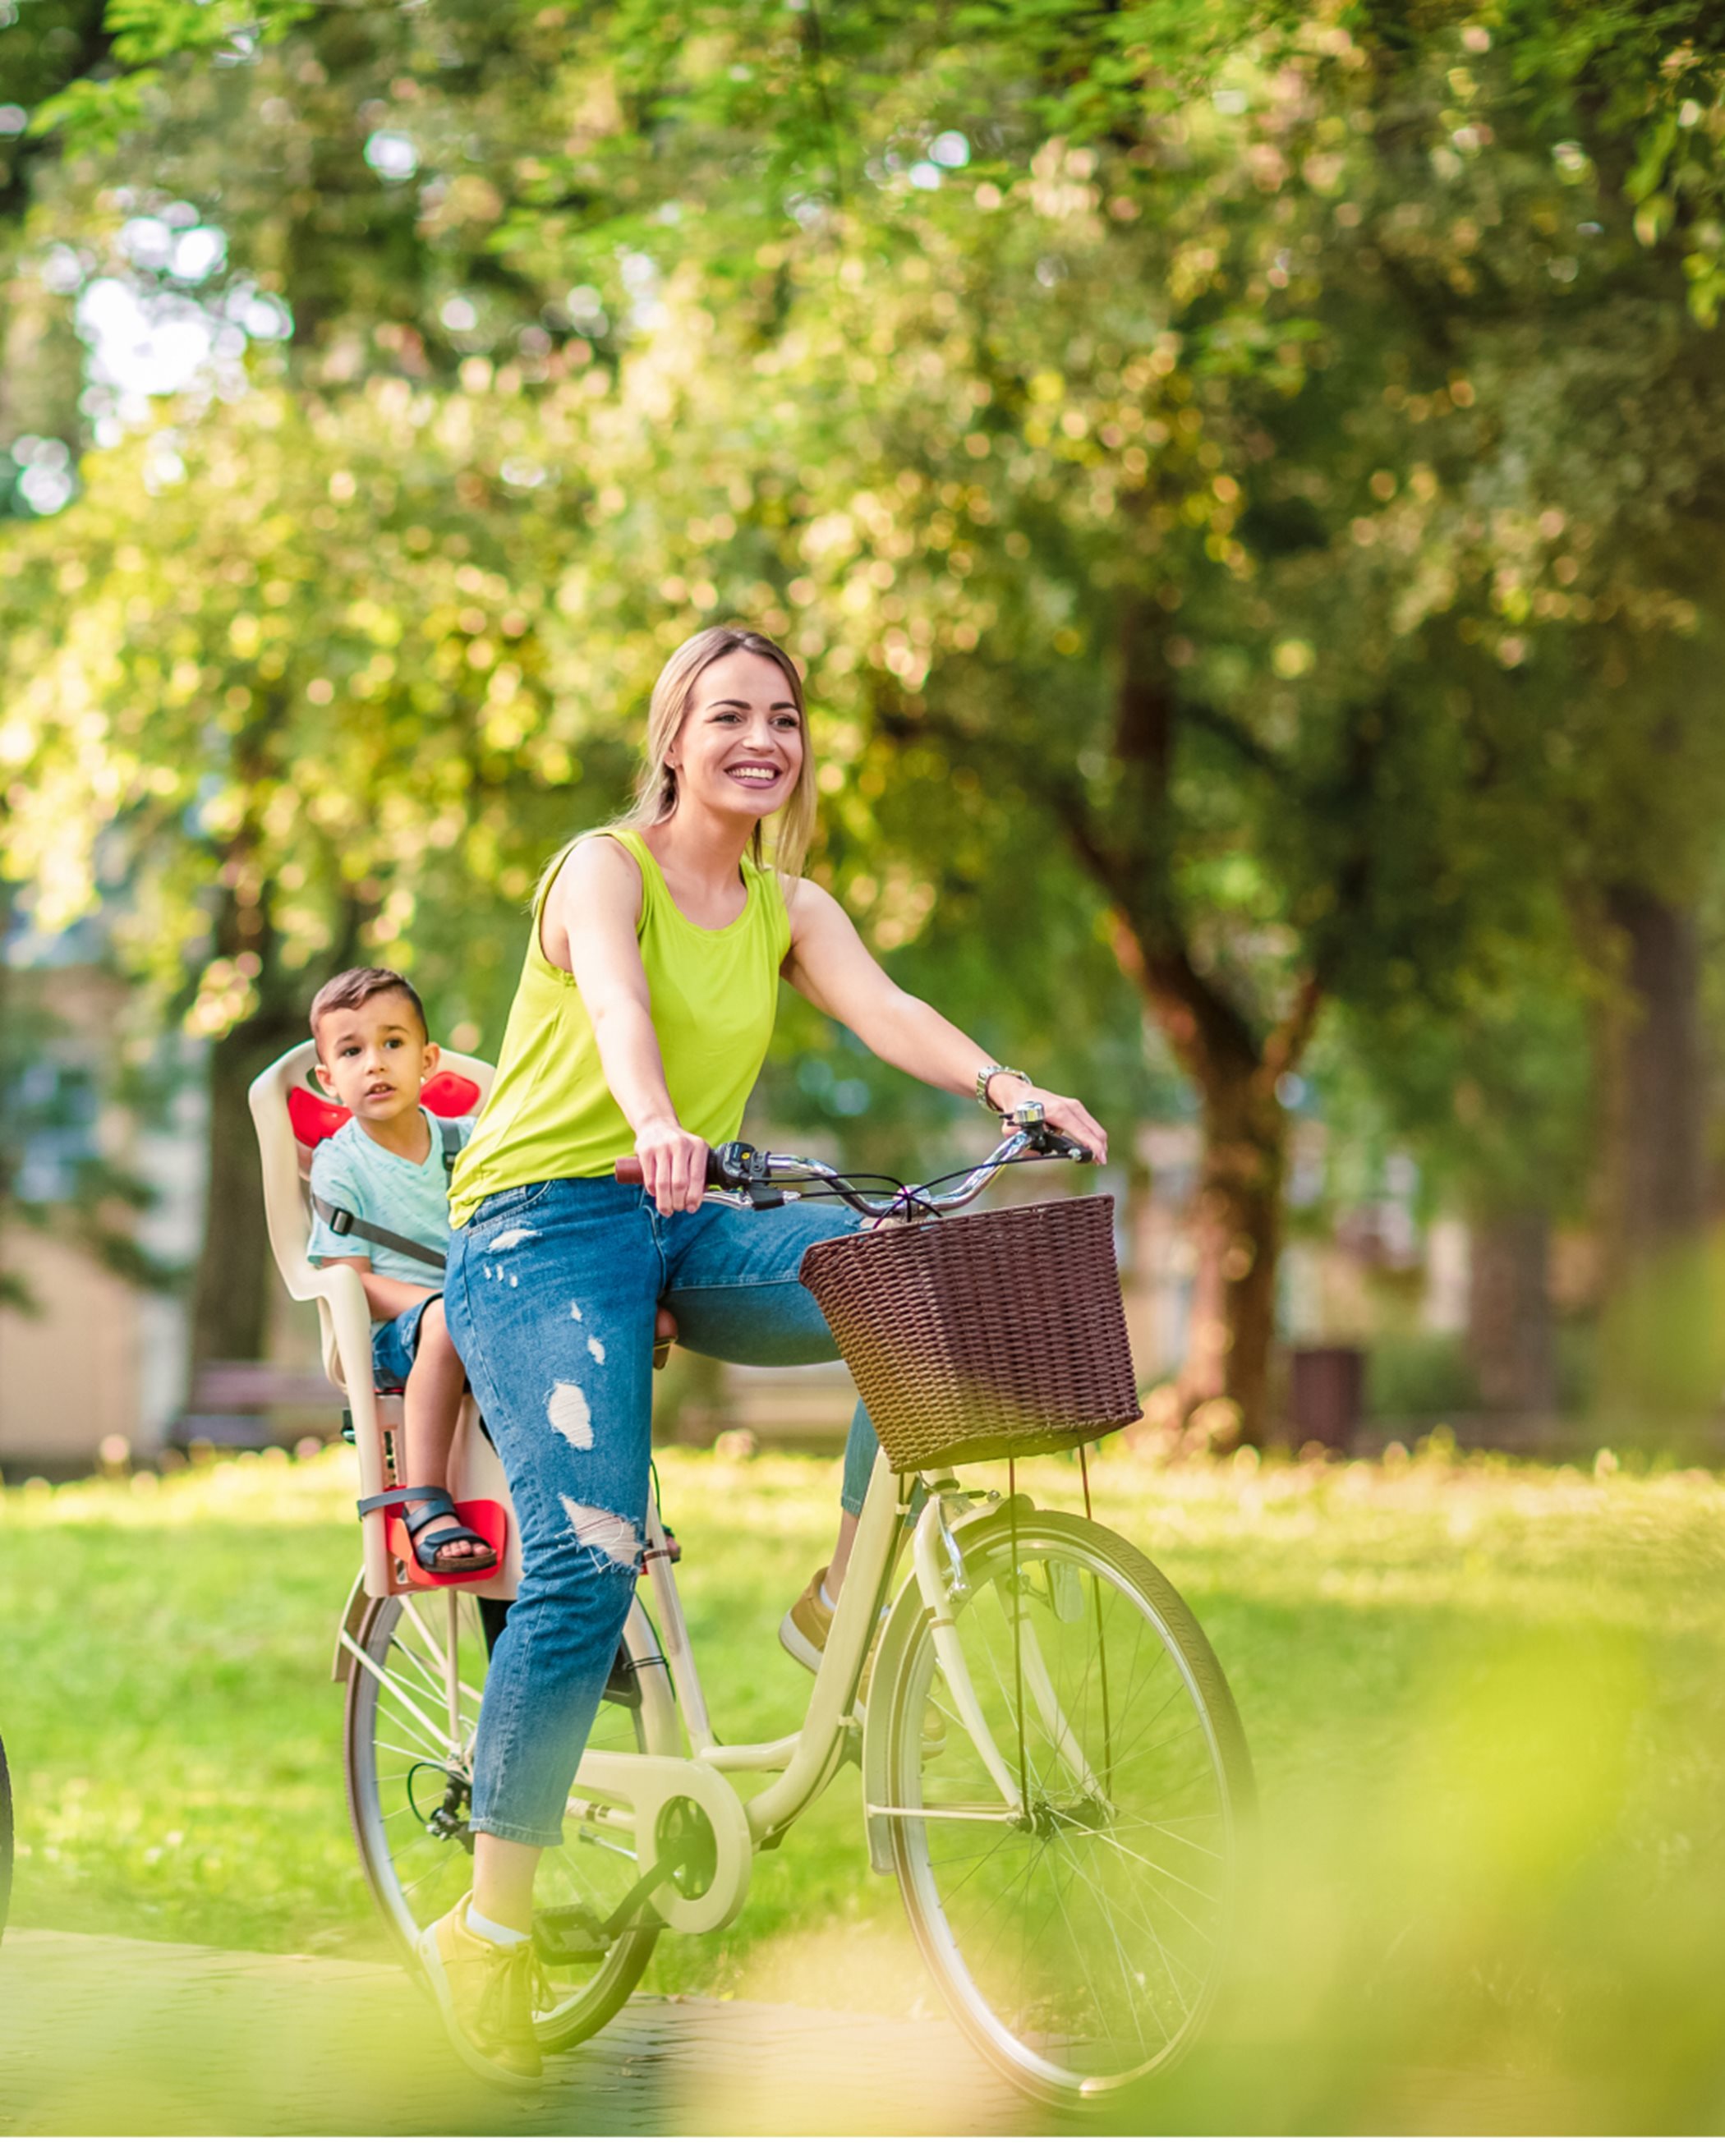 Woman and child riding bike